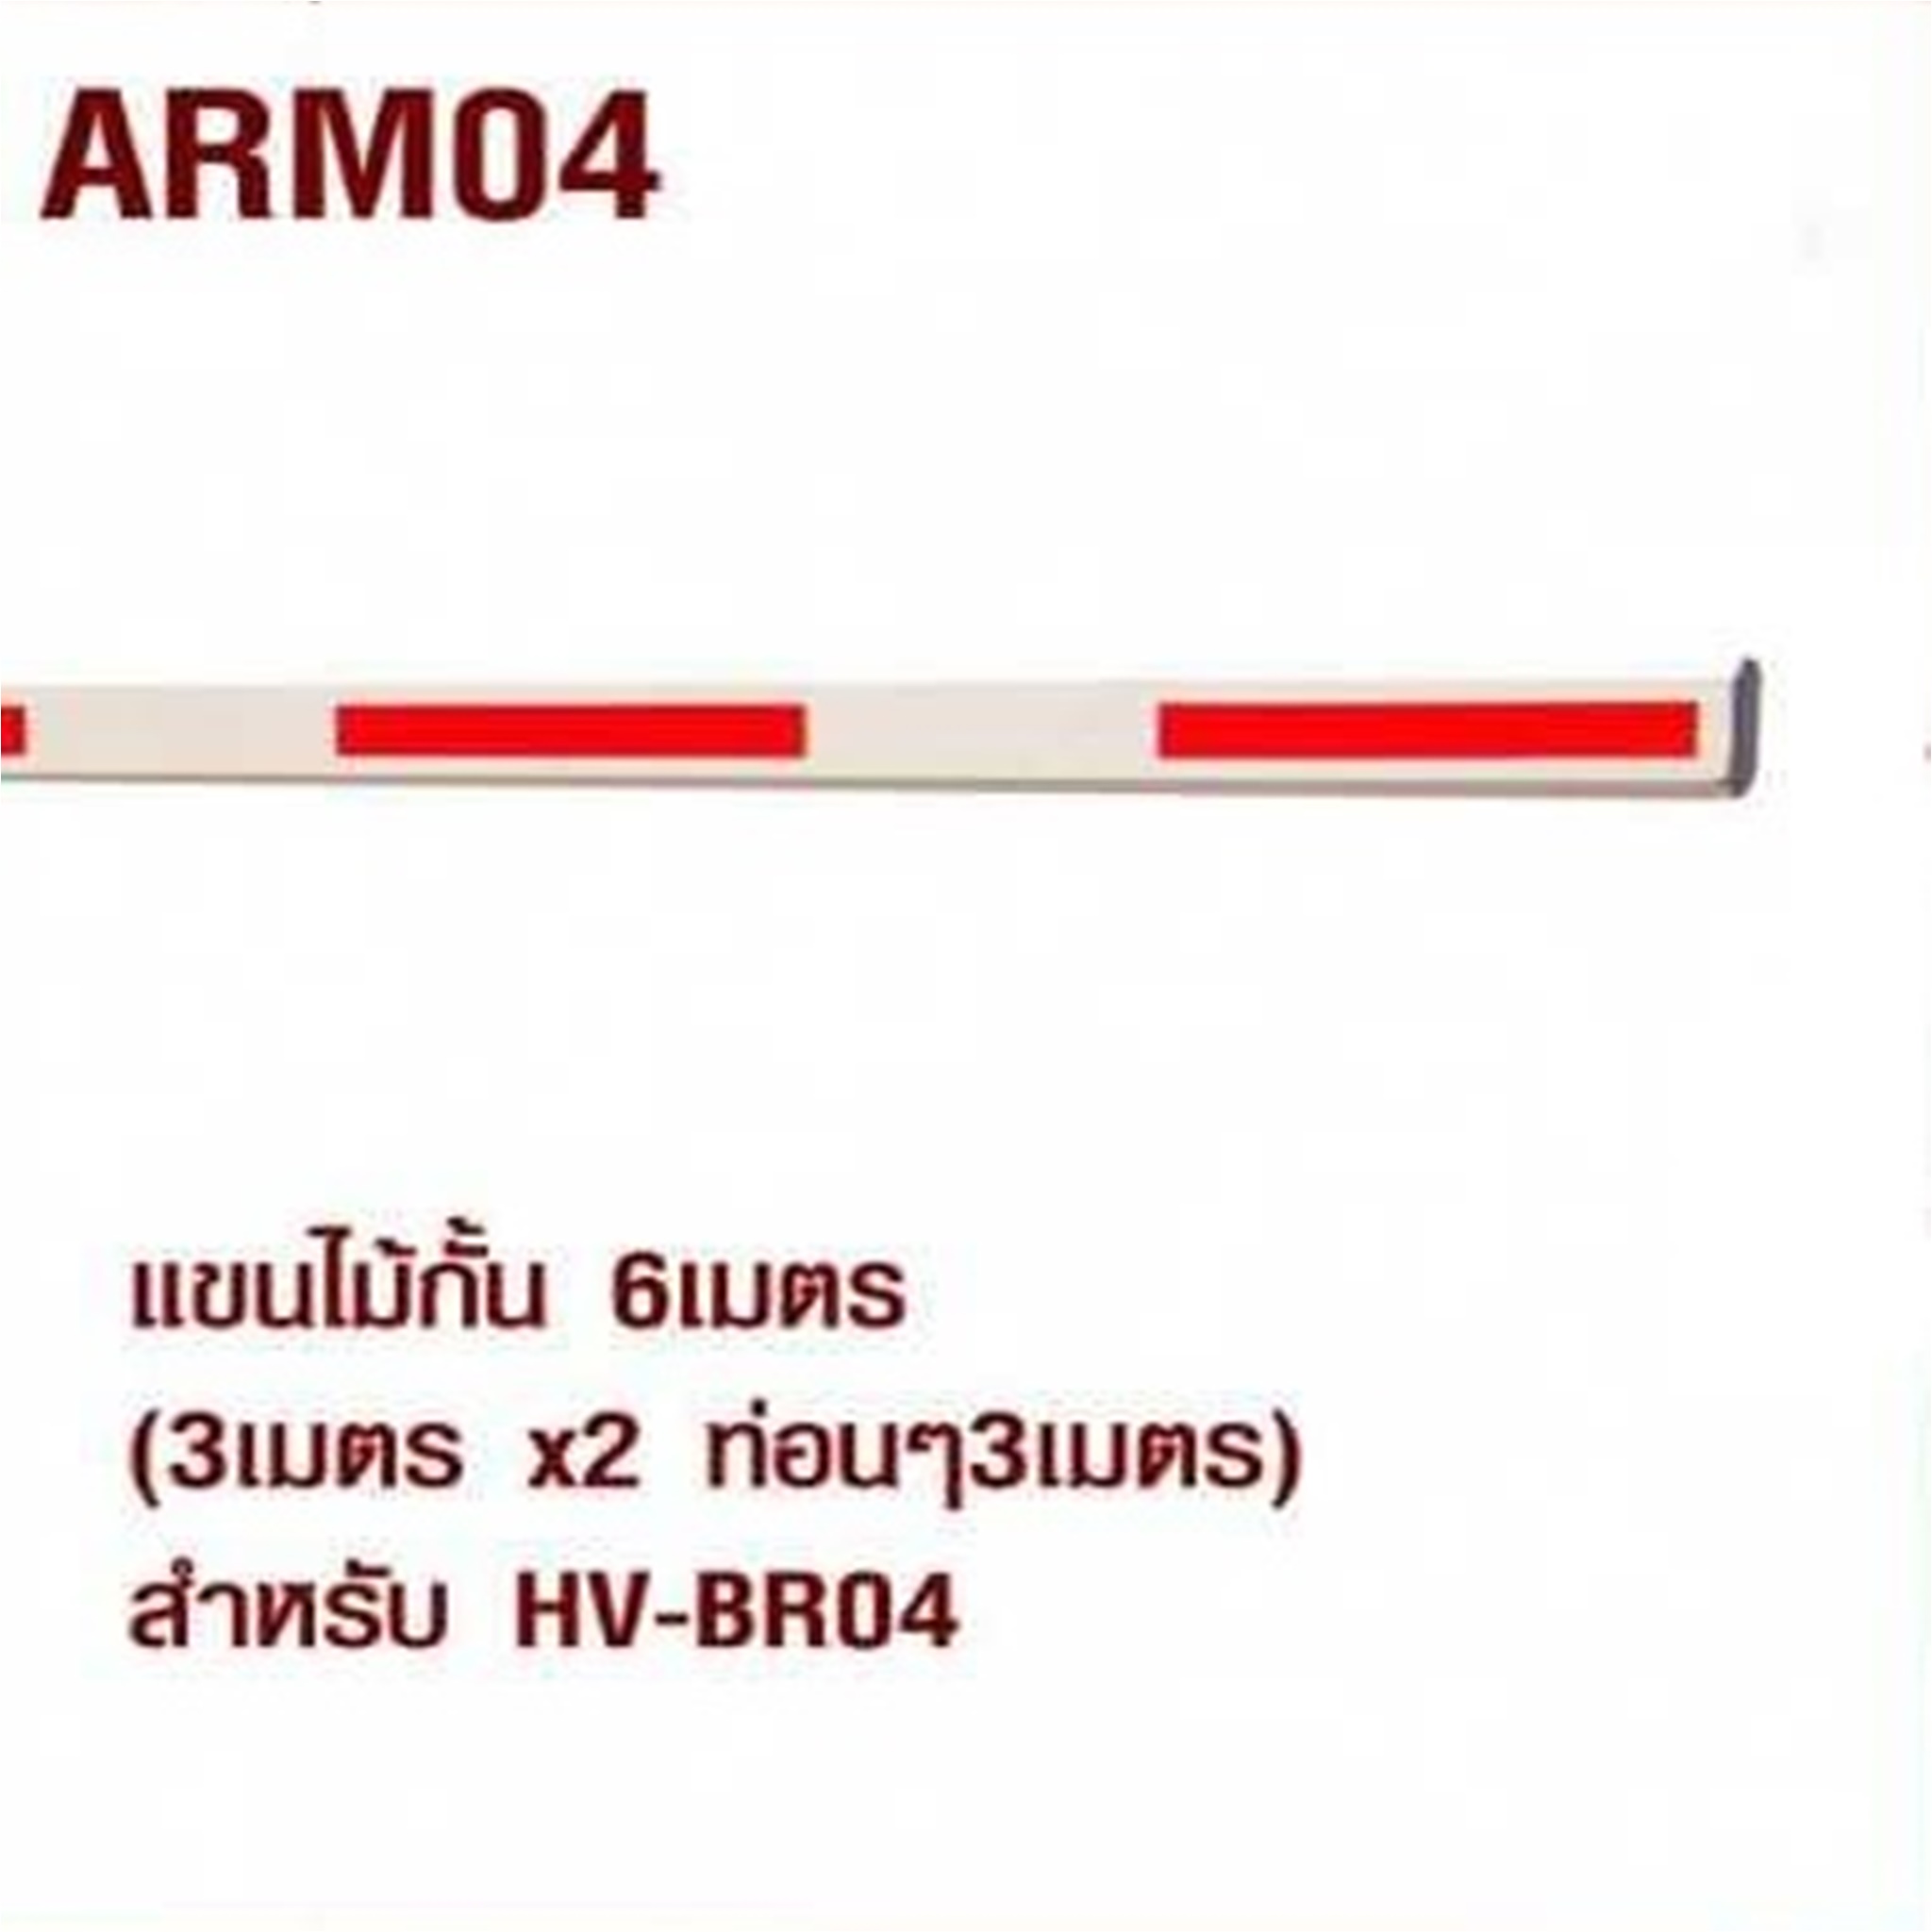 ARM04 แขนไม้กั้น 6 เมตร